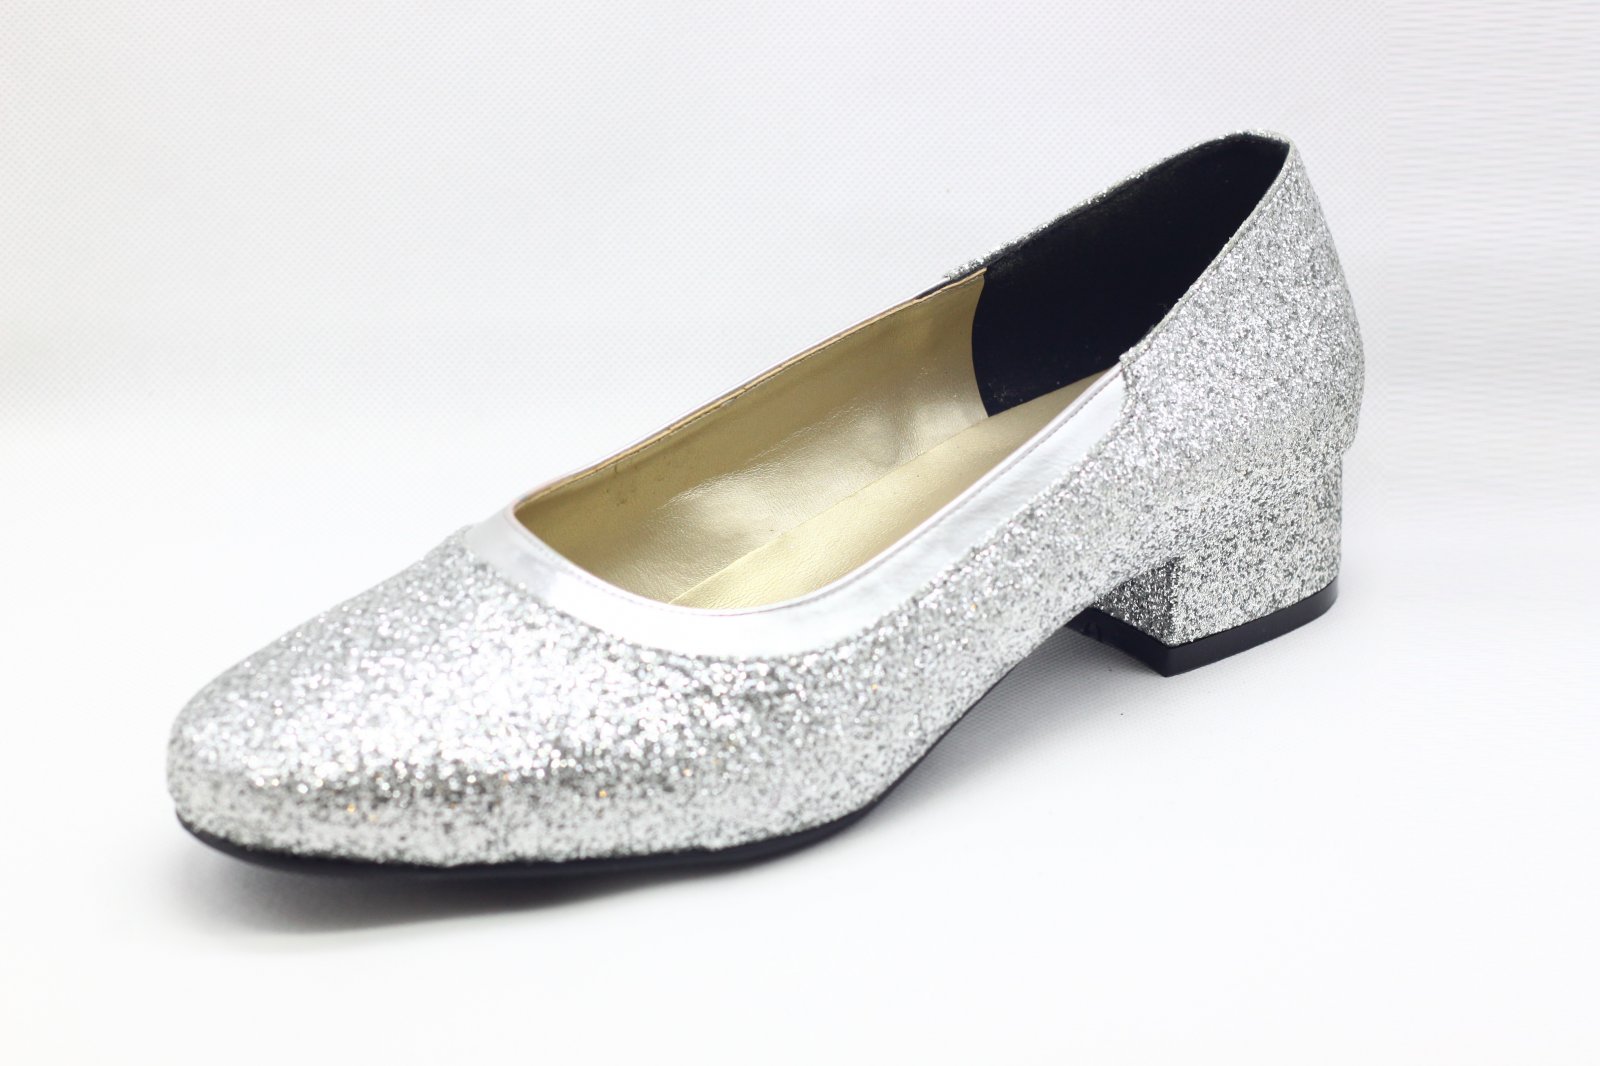 silver dress shoes 1 inch heels